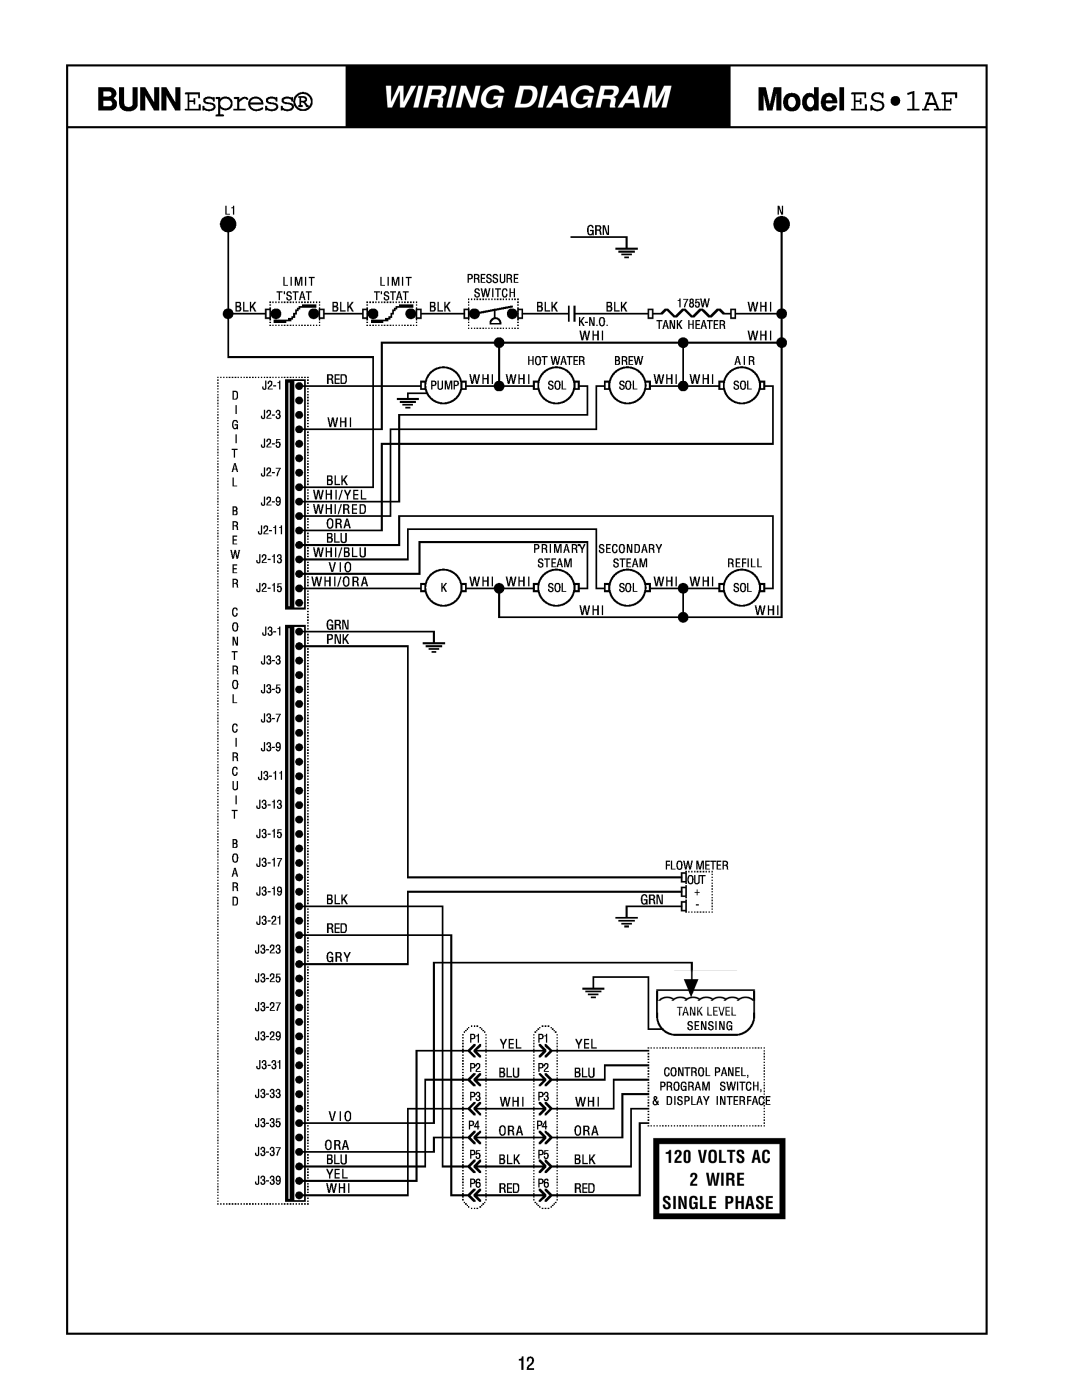 Bunn ES.1AF service manual Wiring Diagram, BUNNEspress, Model ES1AF, Volts Ac, Wire, Single Phase 